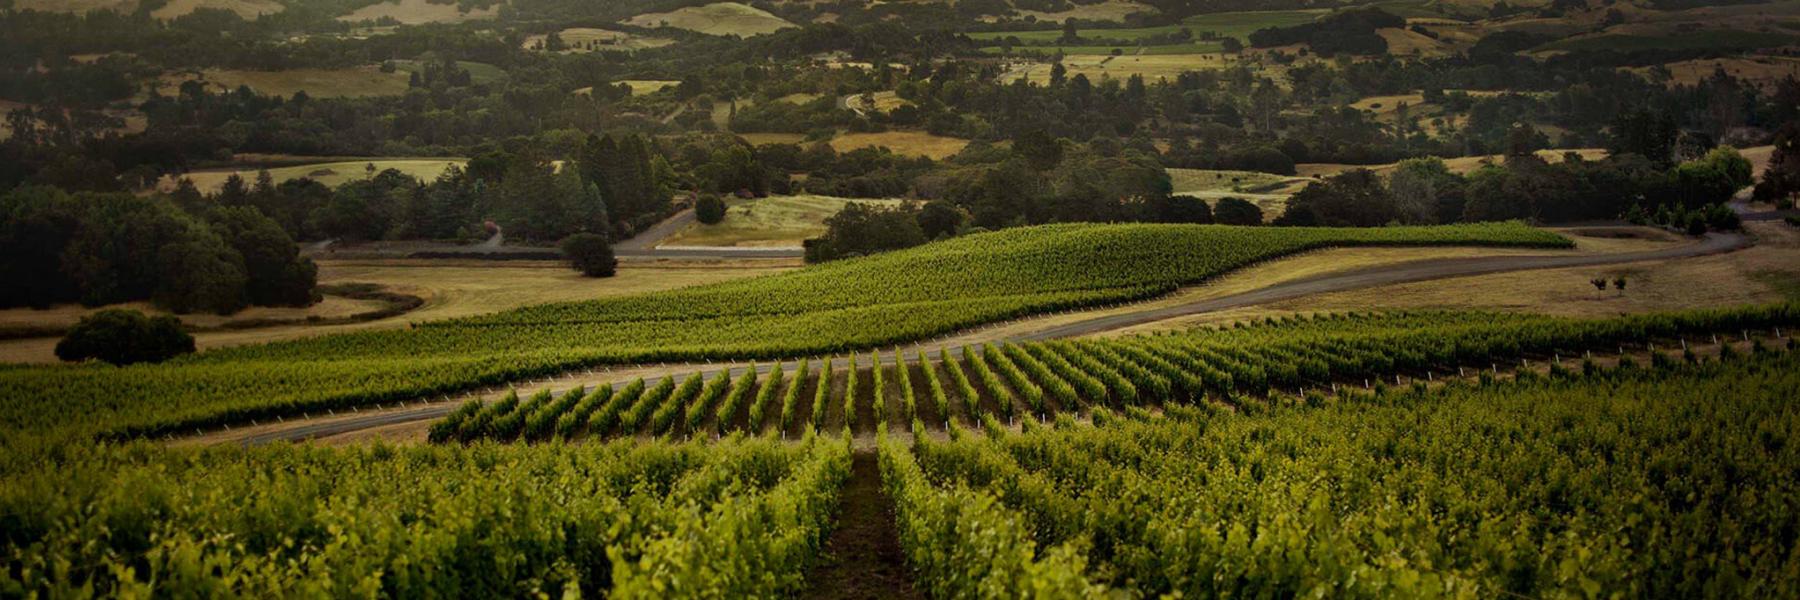 Cenyth vineyards, Sonoma County, California